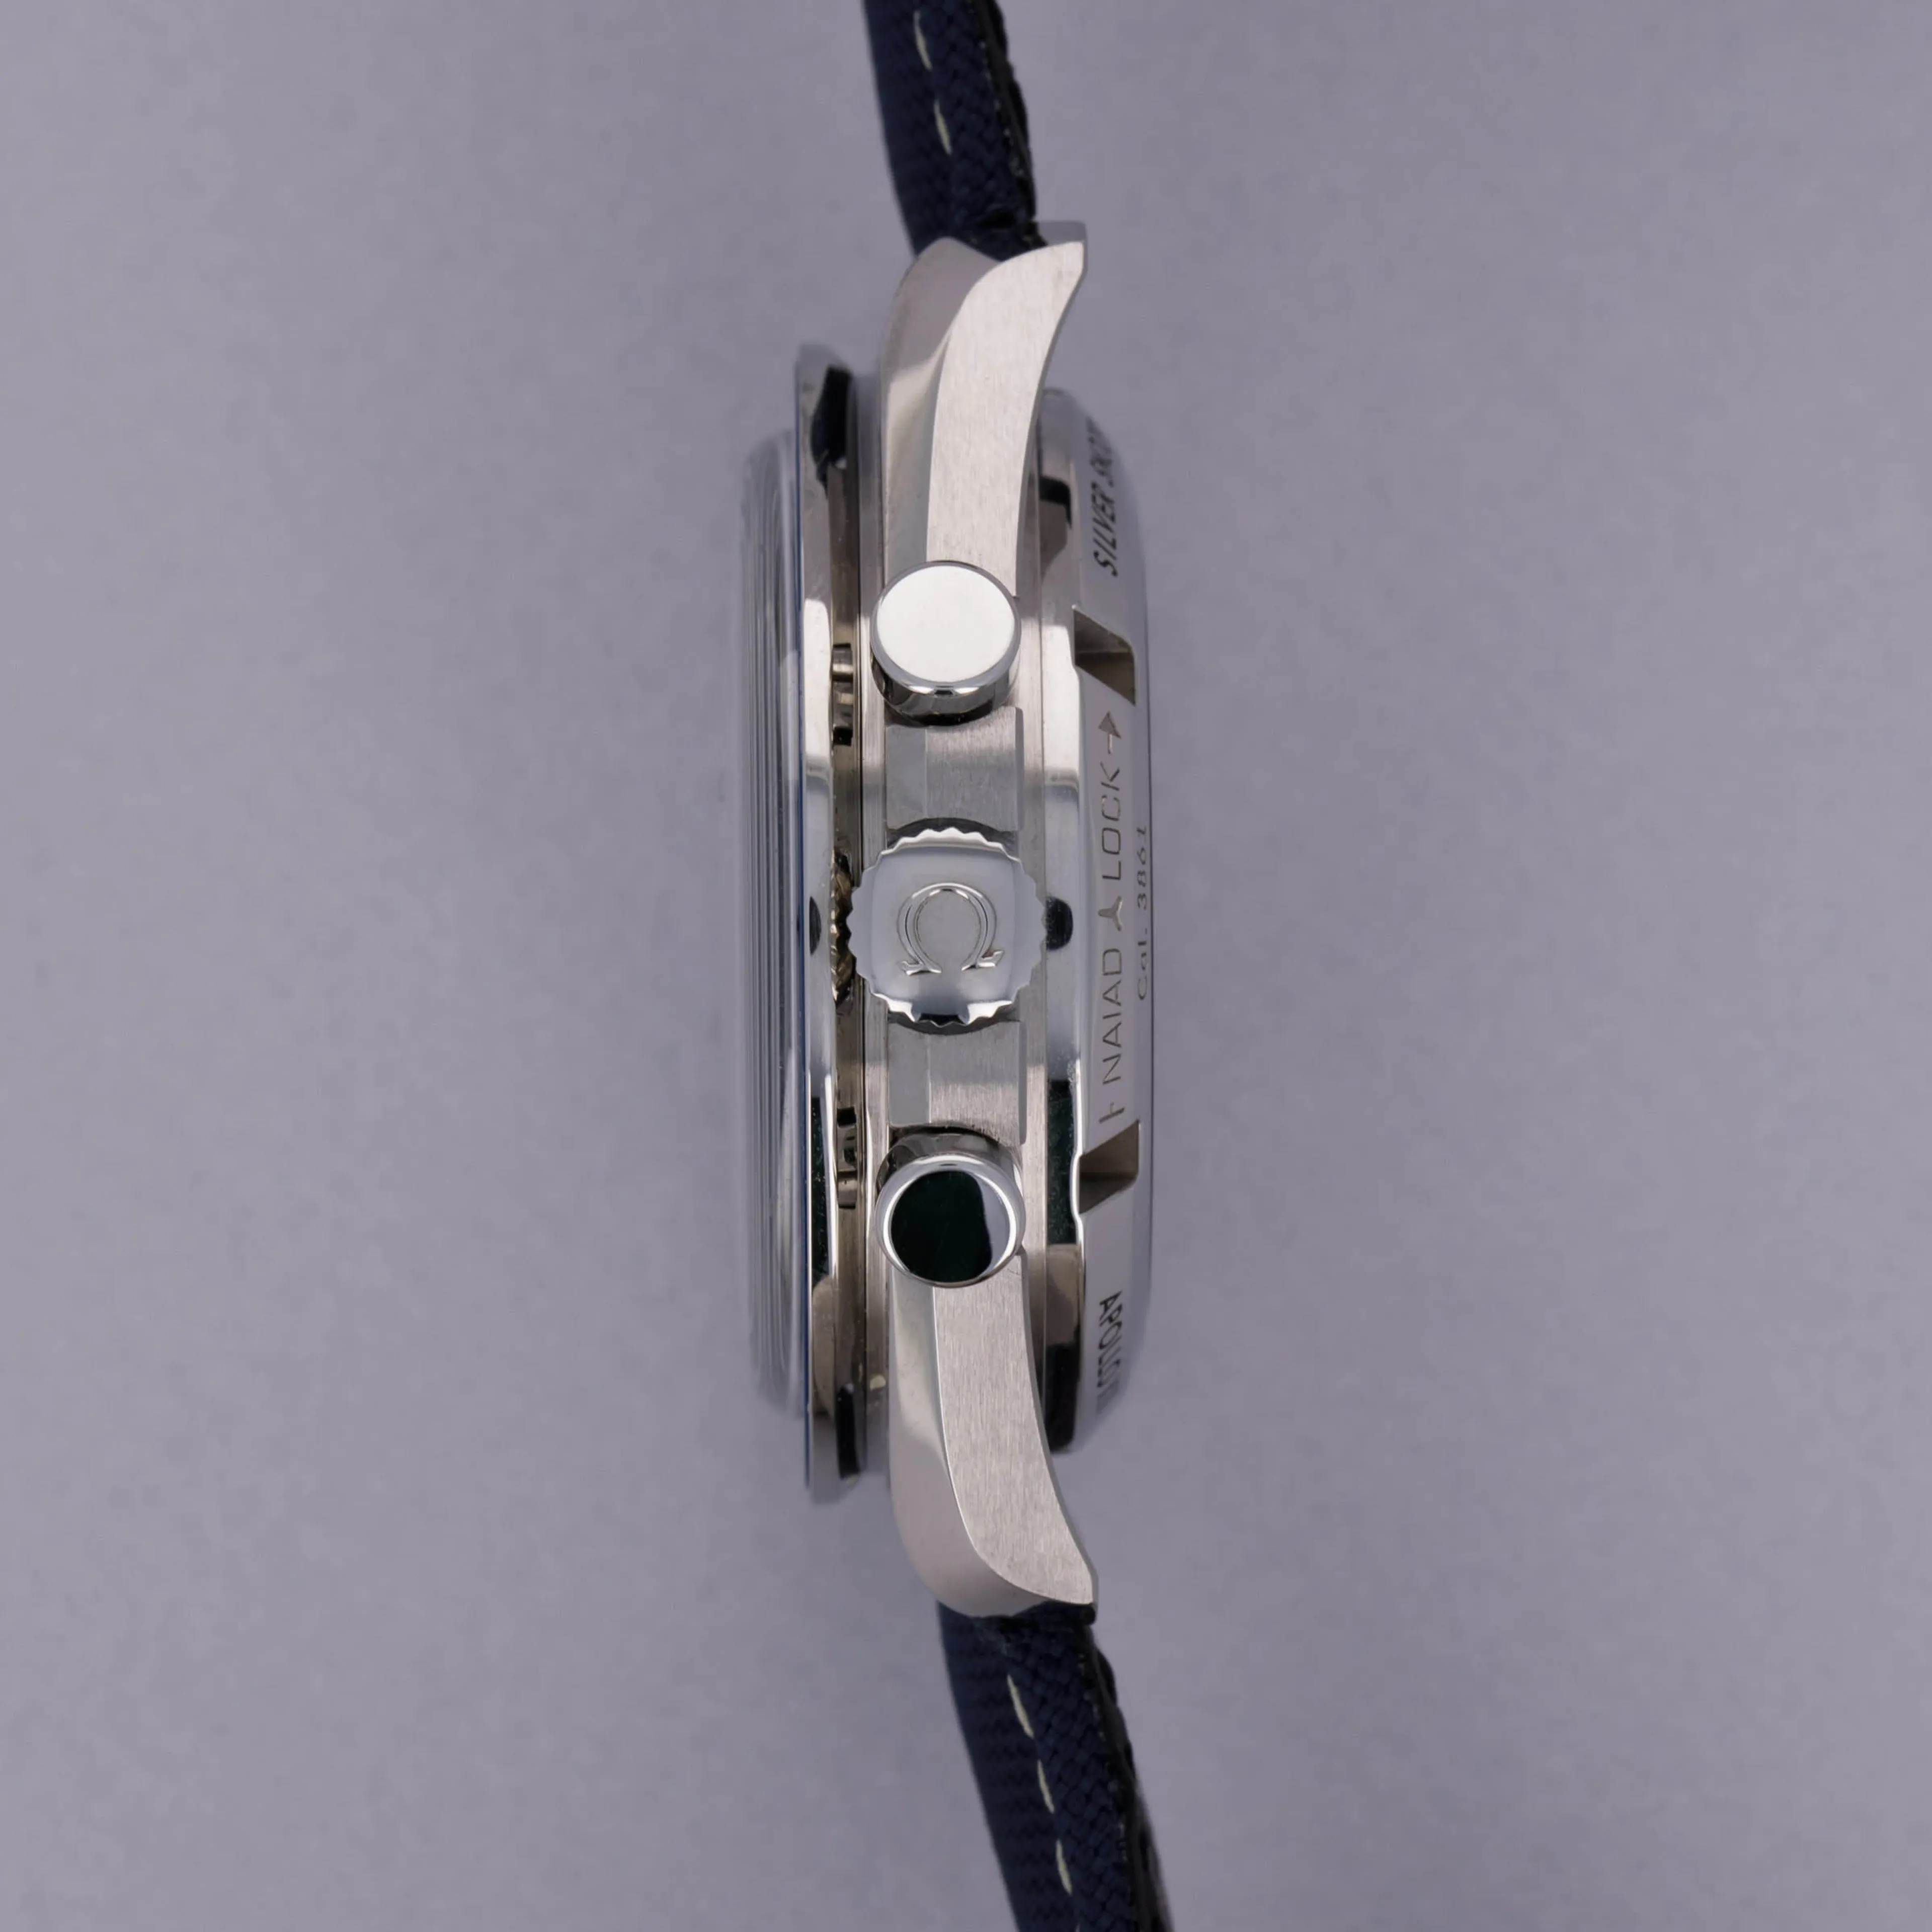 Omega Speedmaster Moon watch 310.32.42.50.02.001 42mm Stainless steel Silver 6